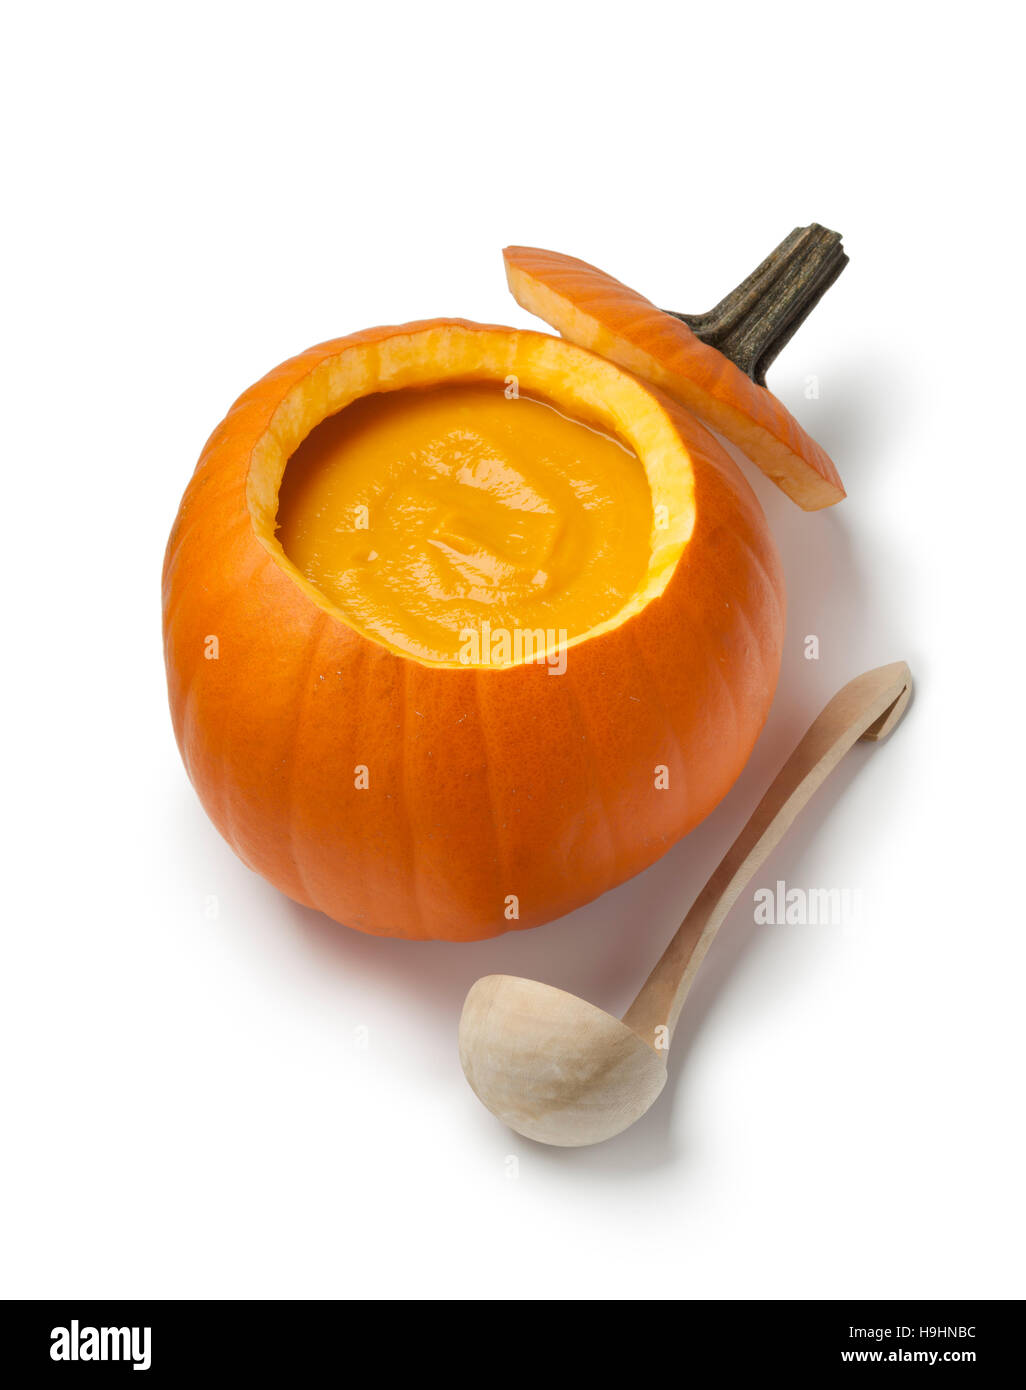 Fresh made pumpkin soup in a orange pumpkin on white background Stock Photo